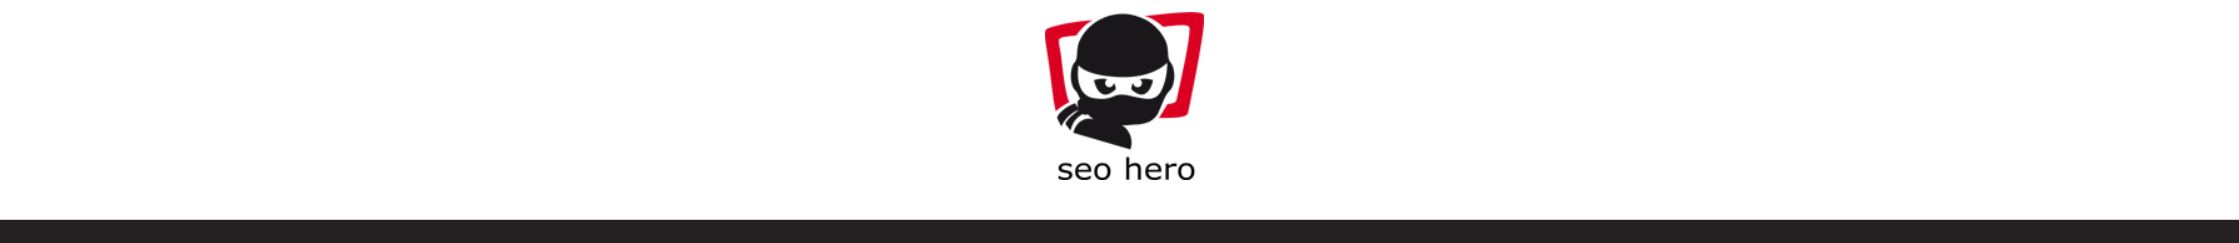 seo hero ninja